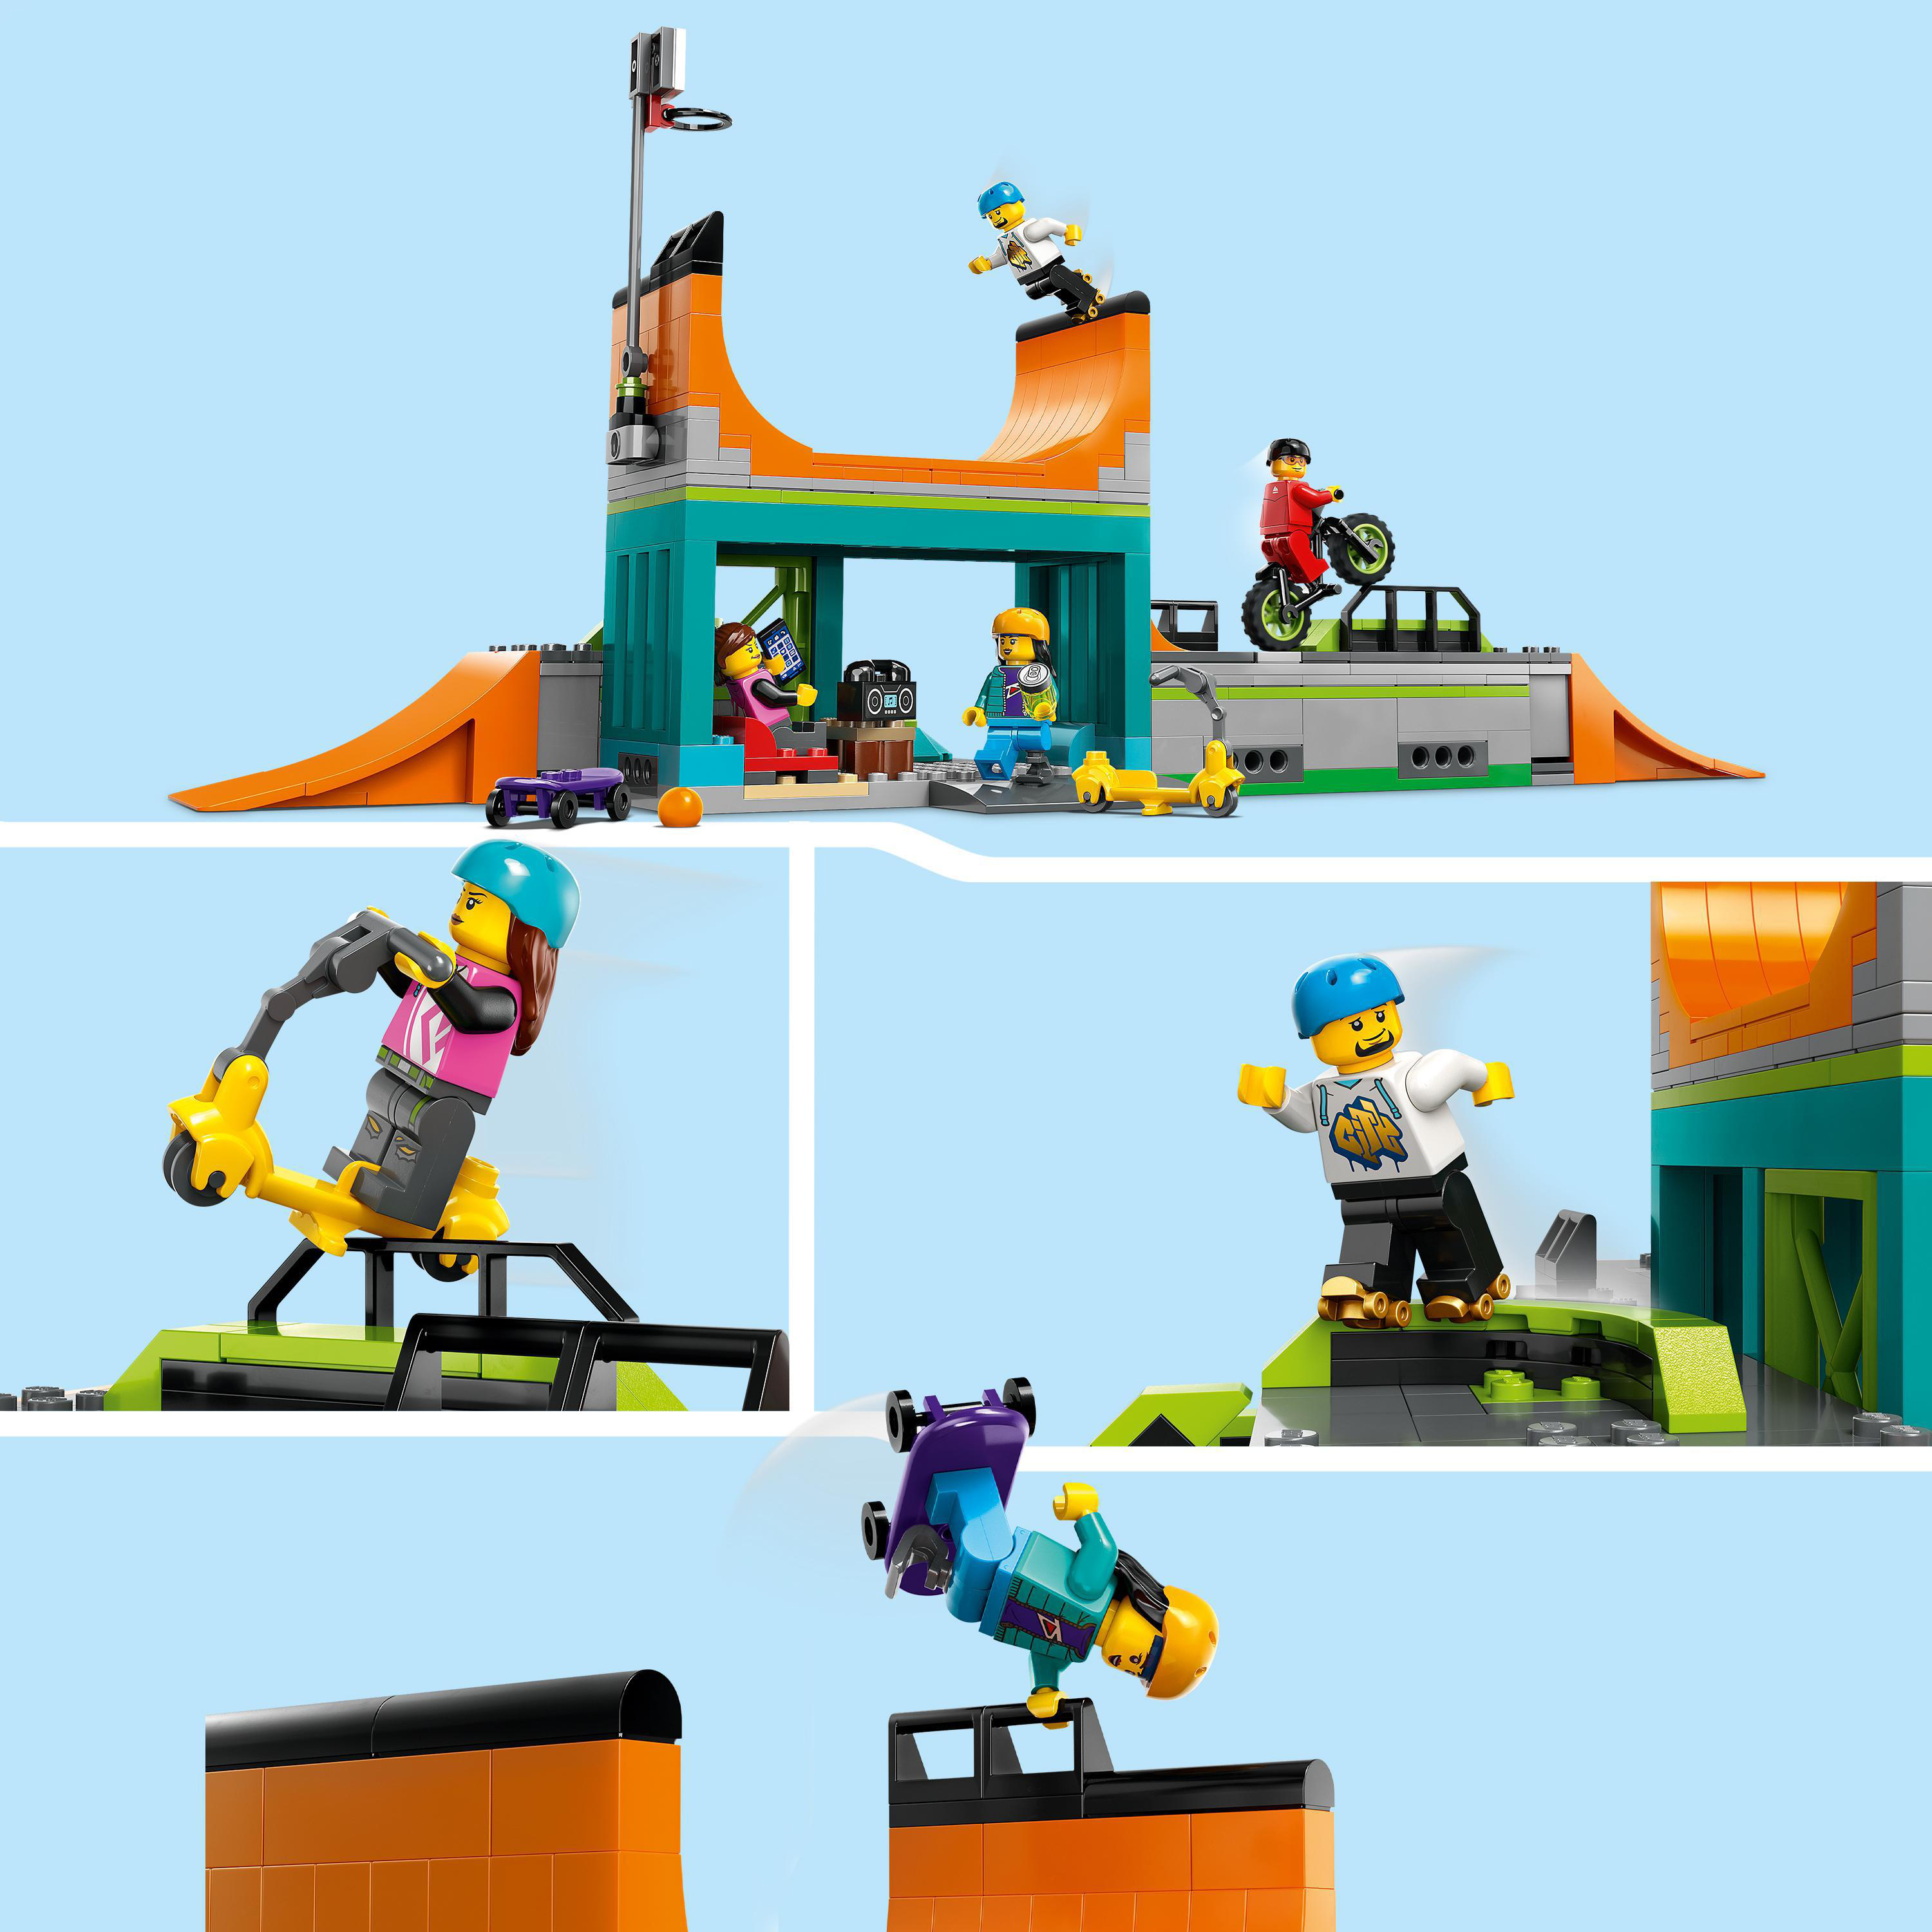 Mehrfarbig 60364 City LEGO Skaterpark Bausatz,